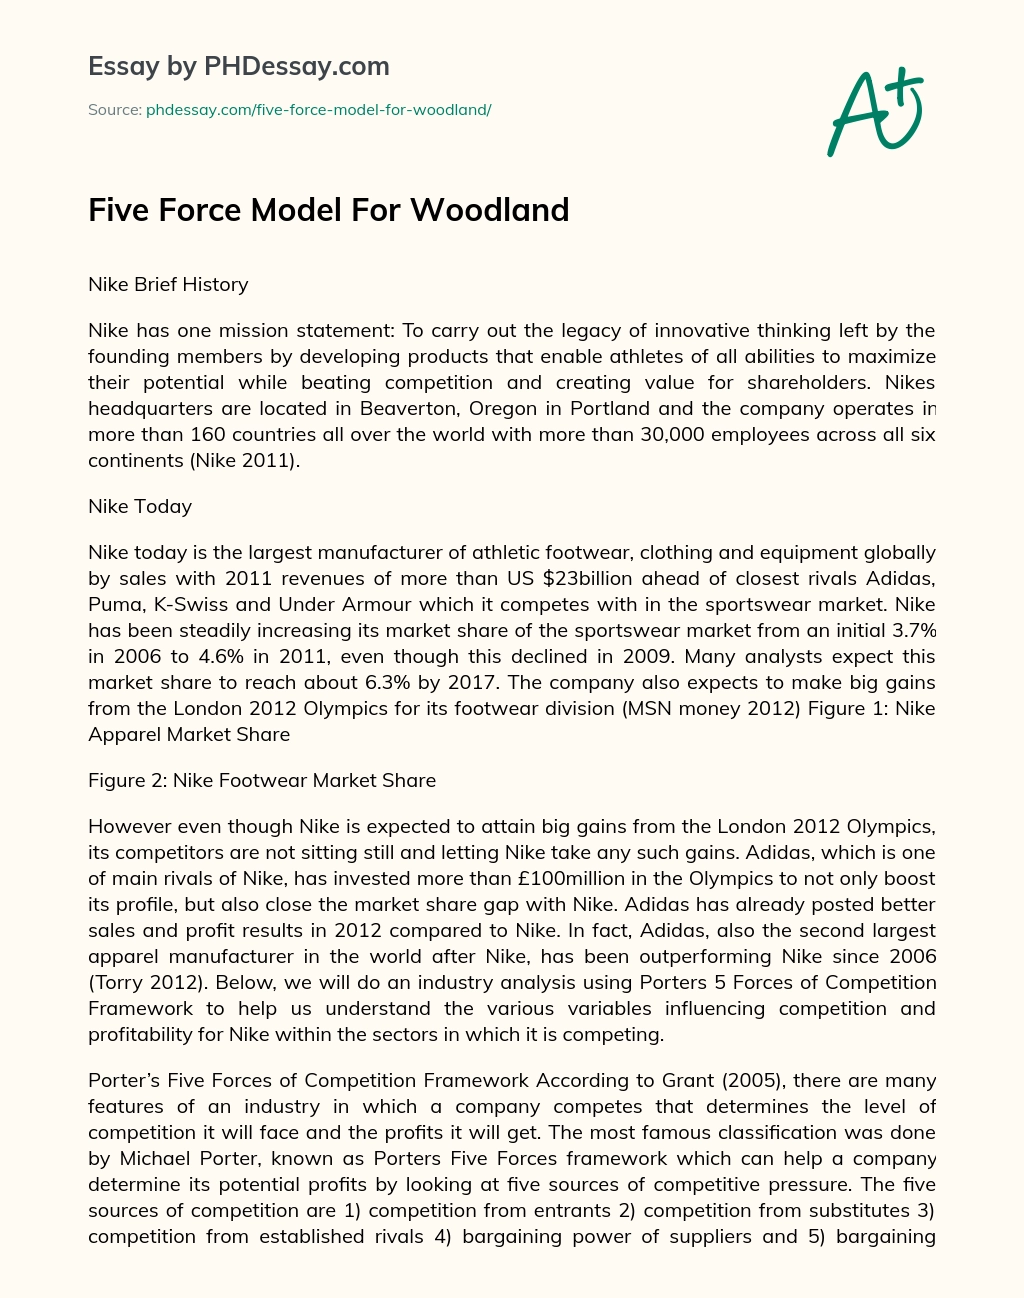 Five Force Model For Woodland essay